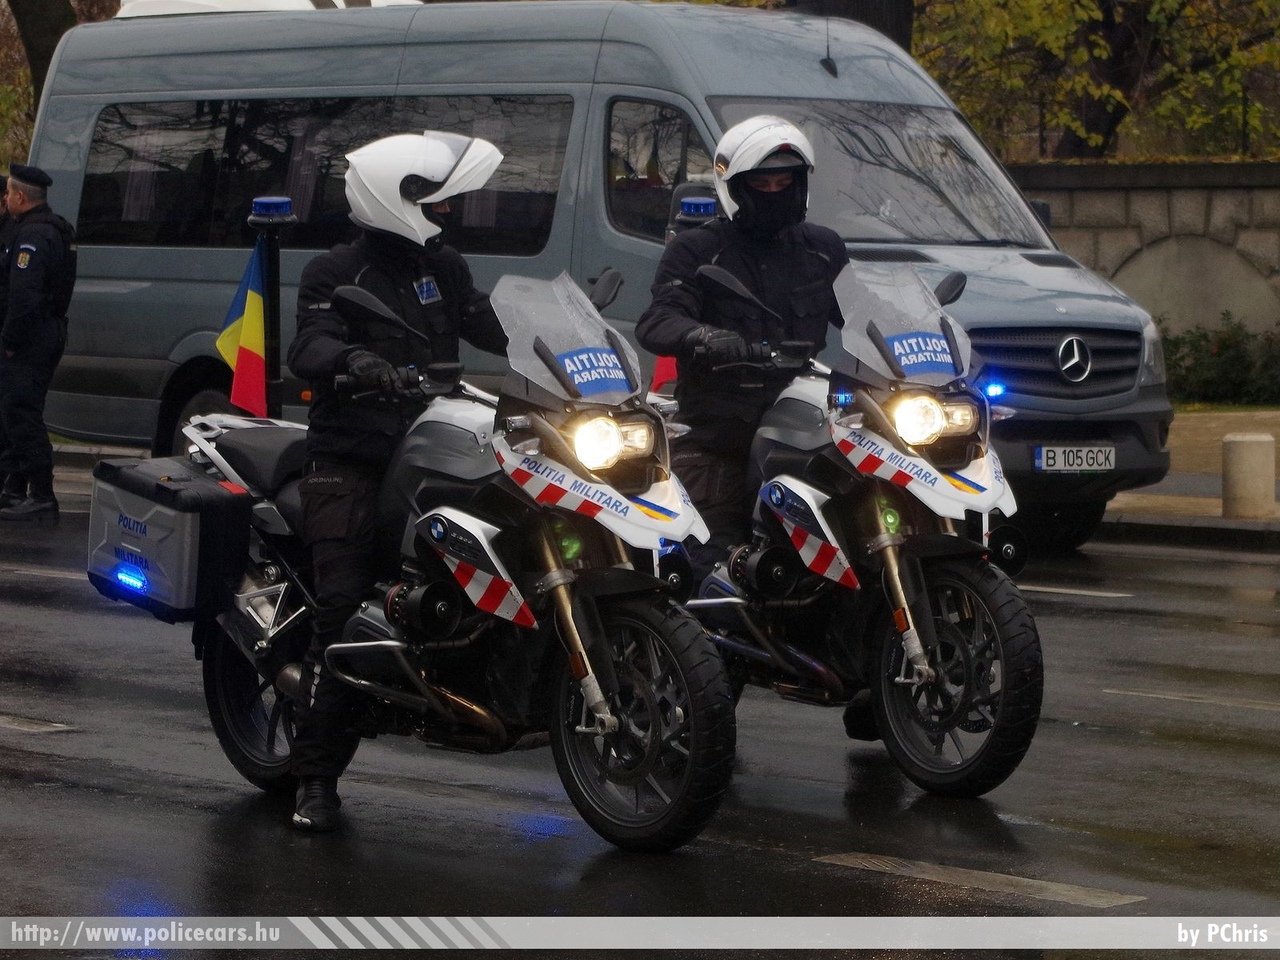 BMW R1200GS, fotó: PChris
Keywords: katonai román Románia rendőr rendőmotor rendőrség Romania military police policecar motor